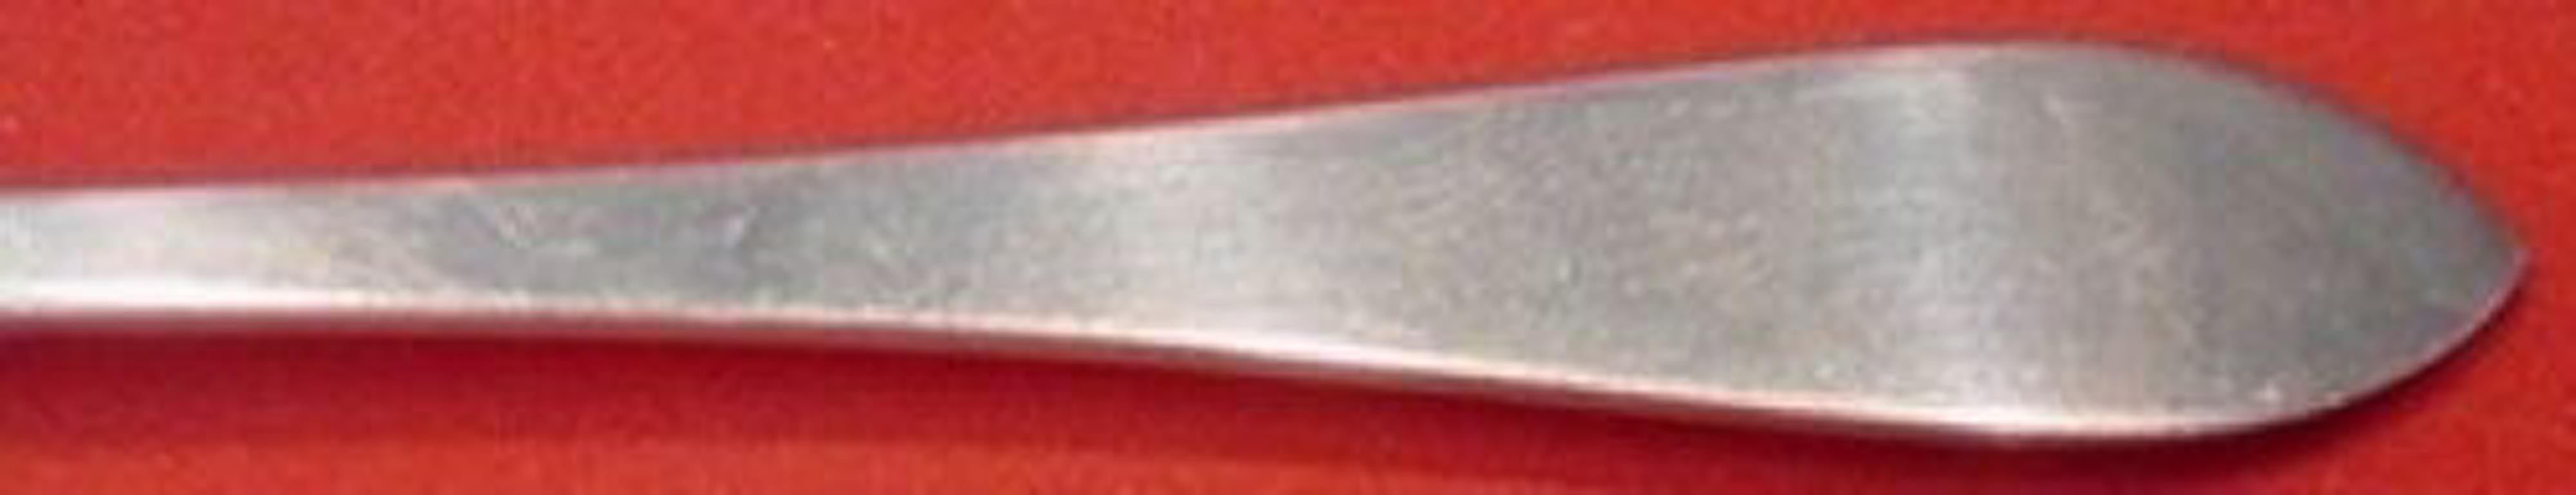 Sterling silver preserve spoon 7 1/4